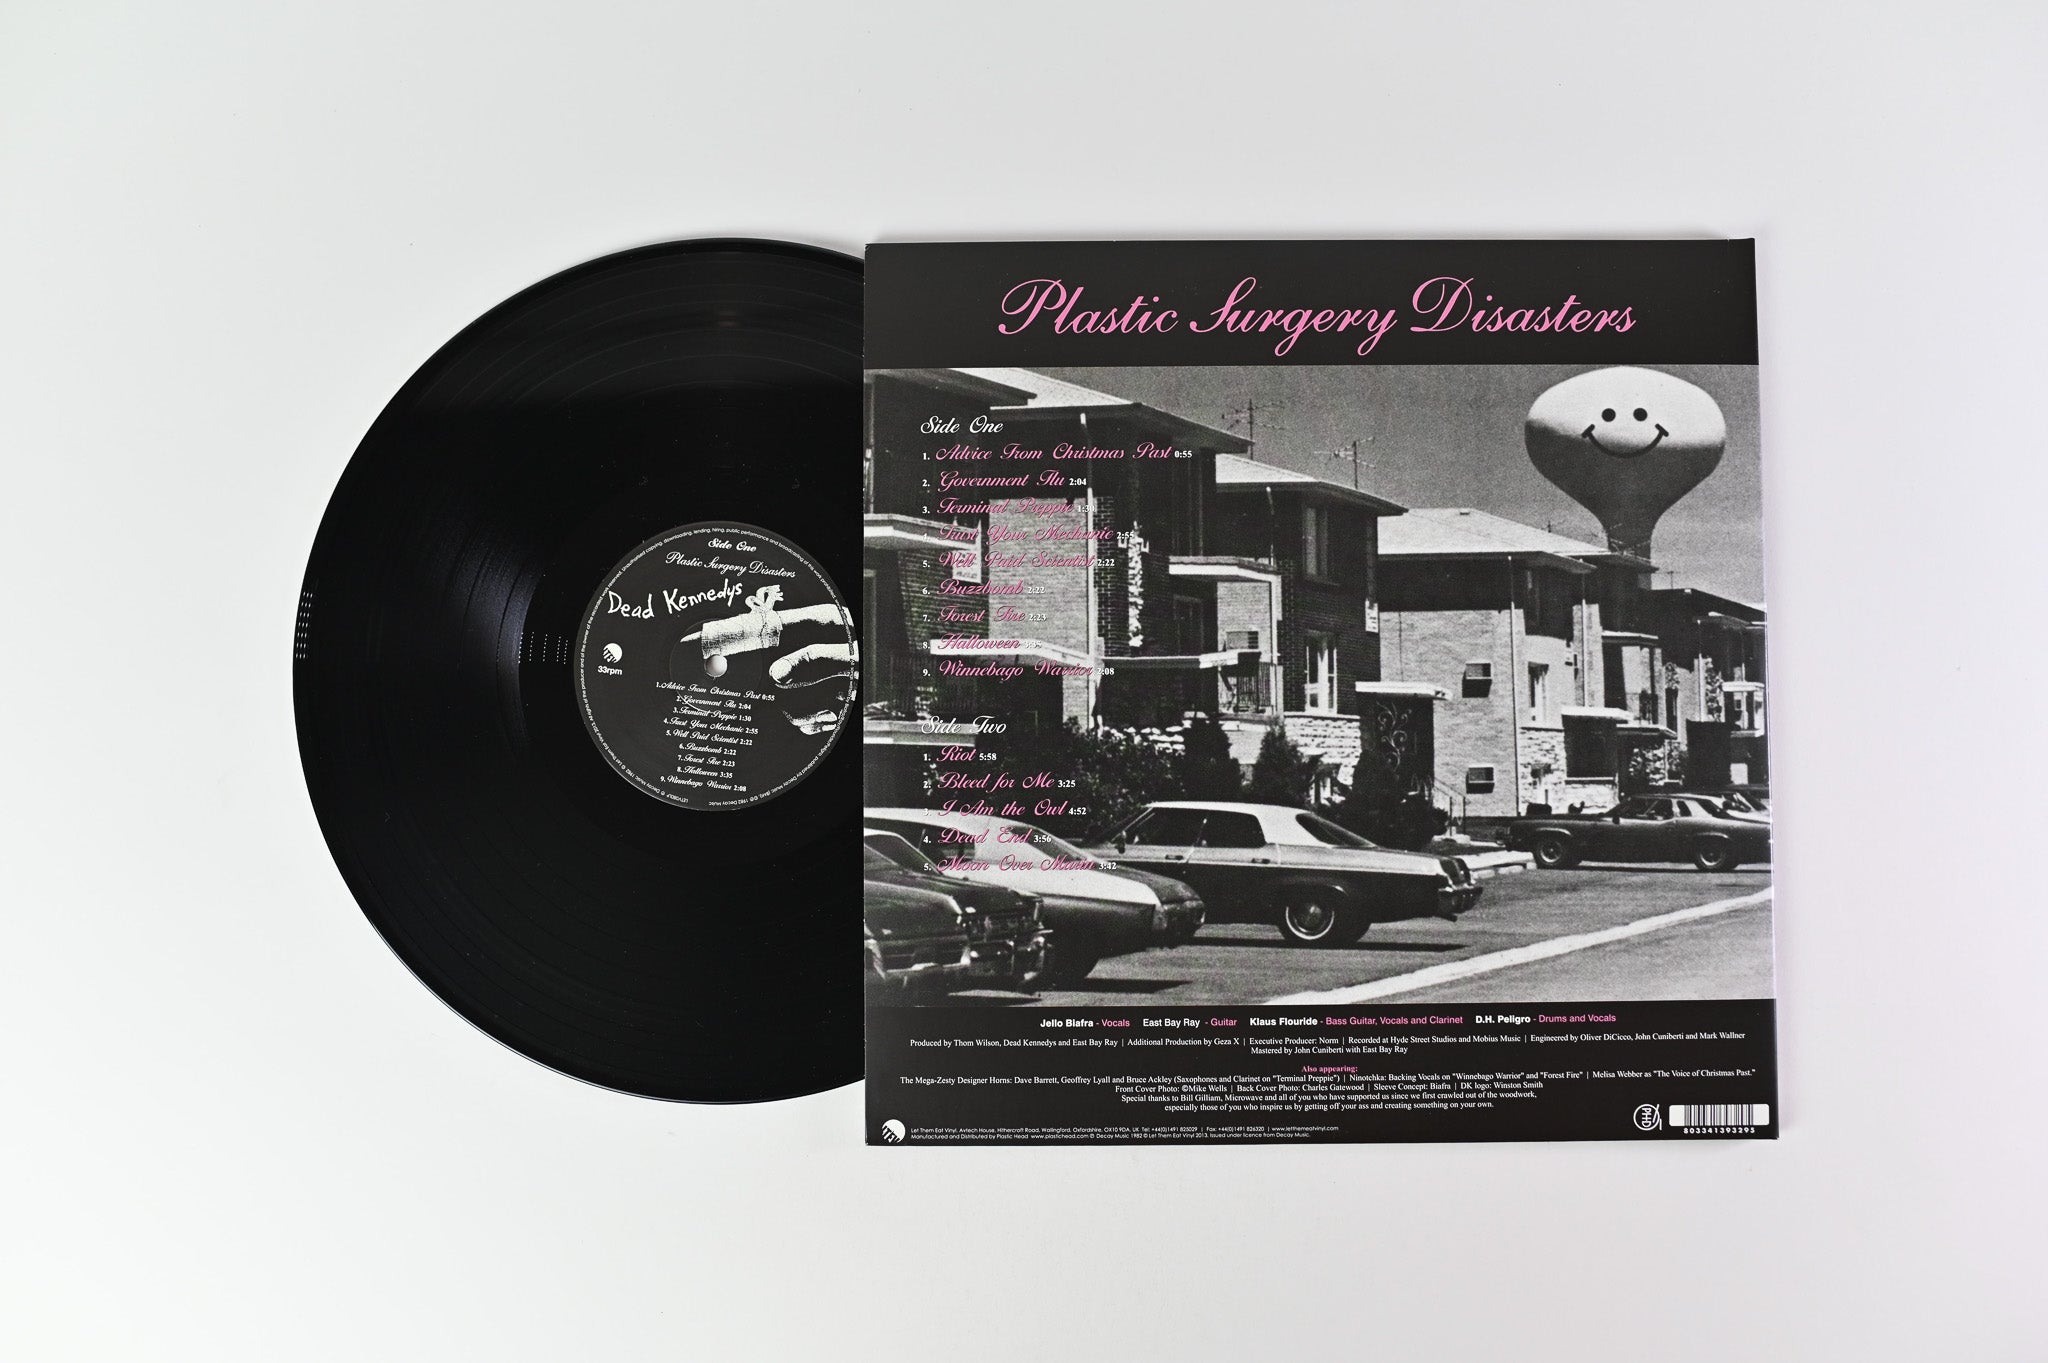 Dead Kennedys - Plastic Surgery Disasters on Let Them Eat Vinyl Ltd Reissue